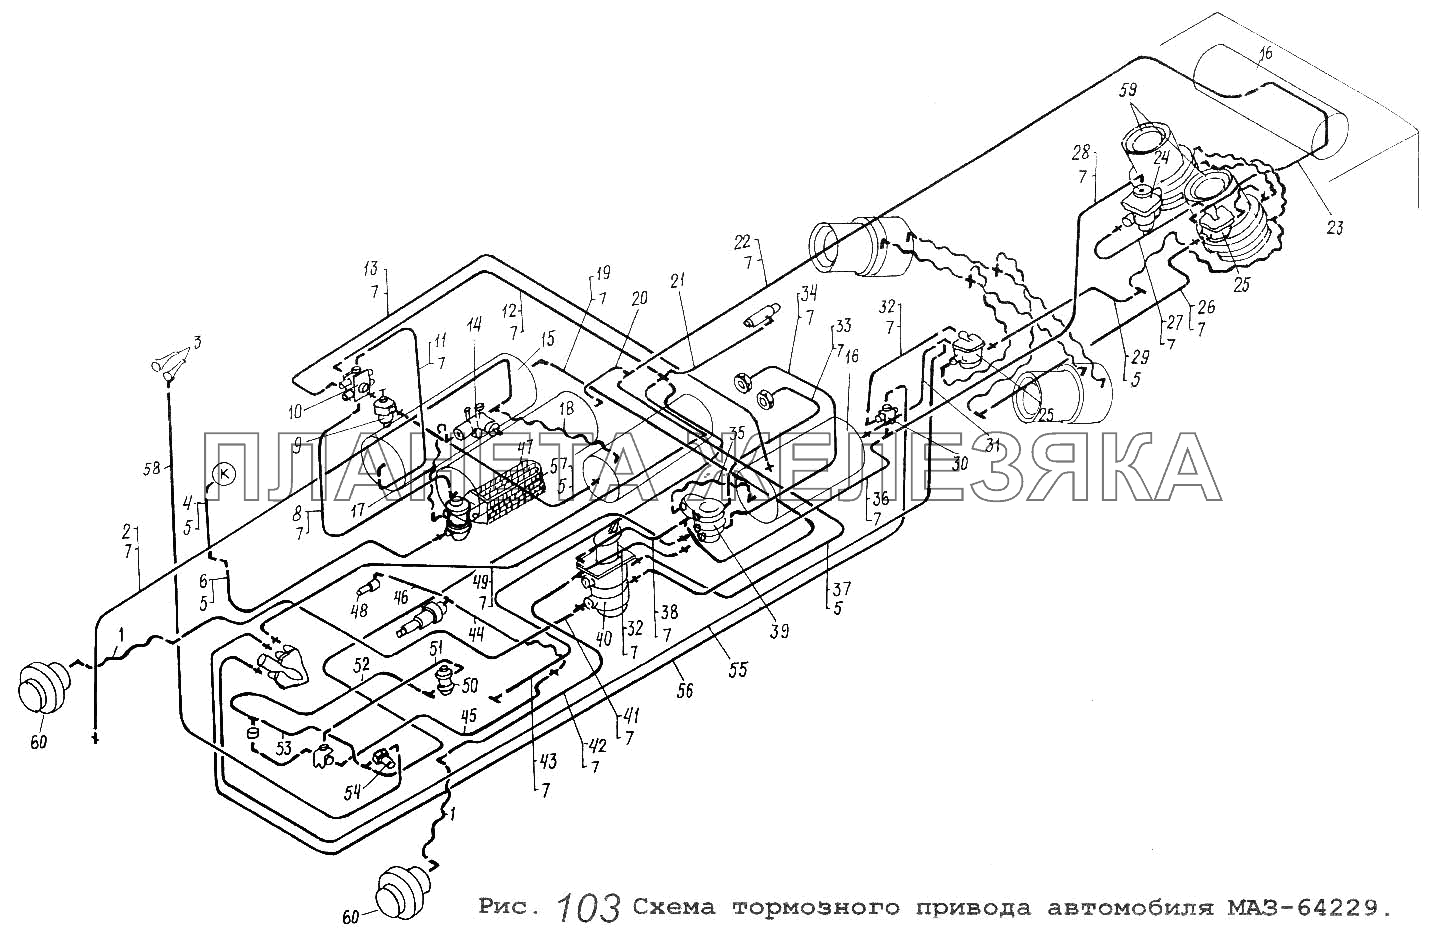 Схема тормозного привода автомобиля МАЗ-64229 Общий (см. мод-ции)